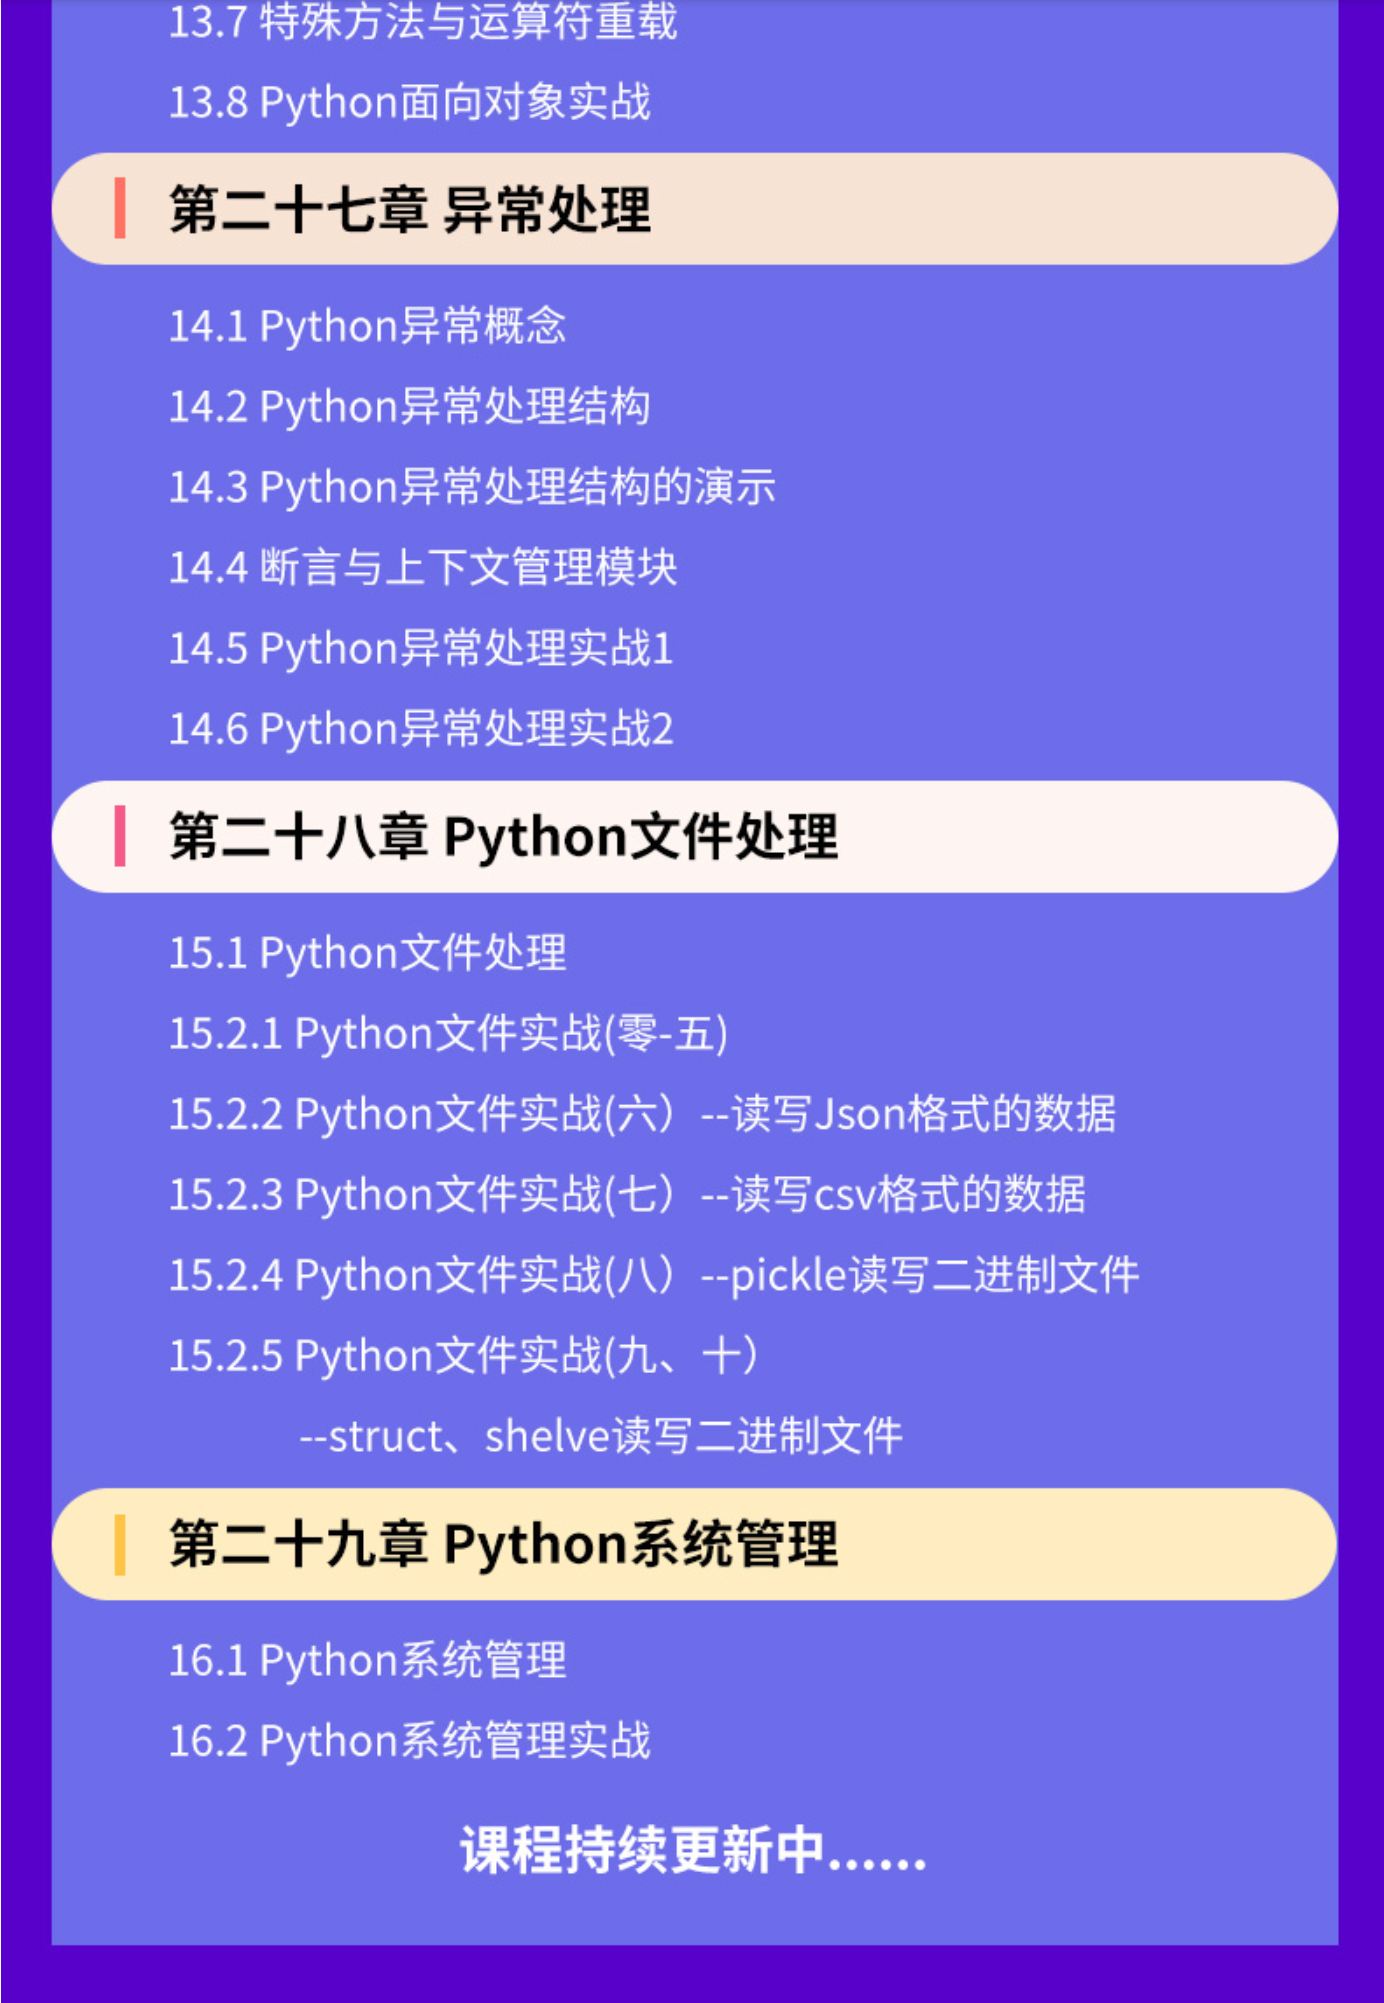 python详情3.png